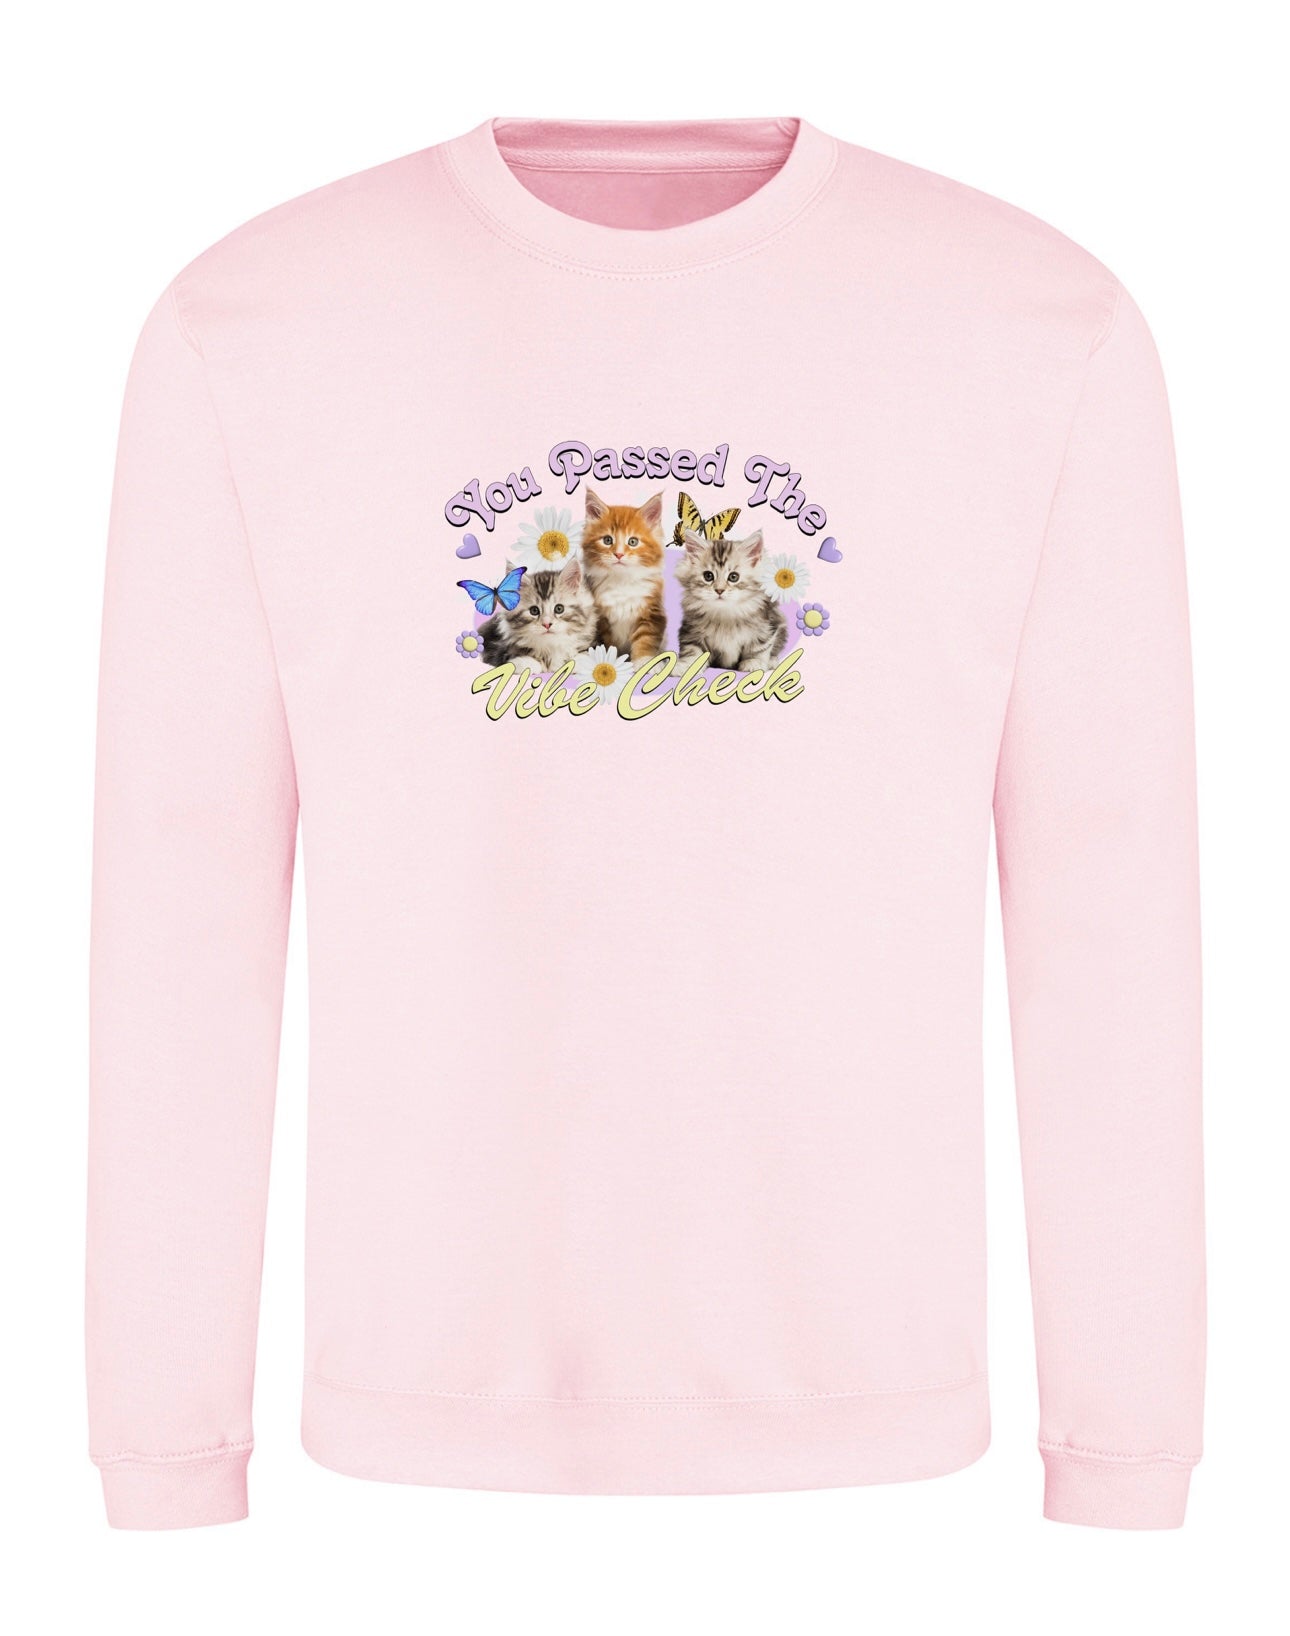 Light Pink "Vibe Check" Kittens Sweatshirt